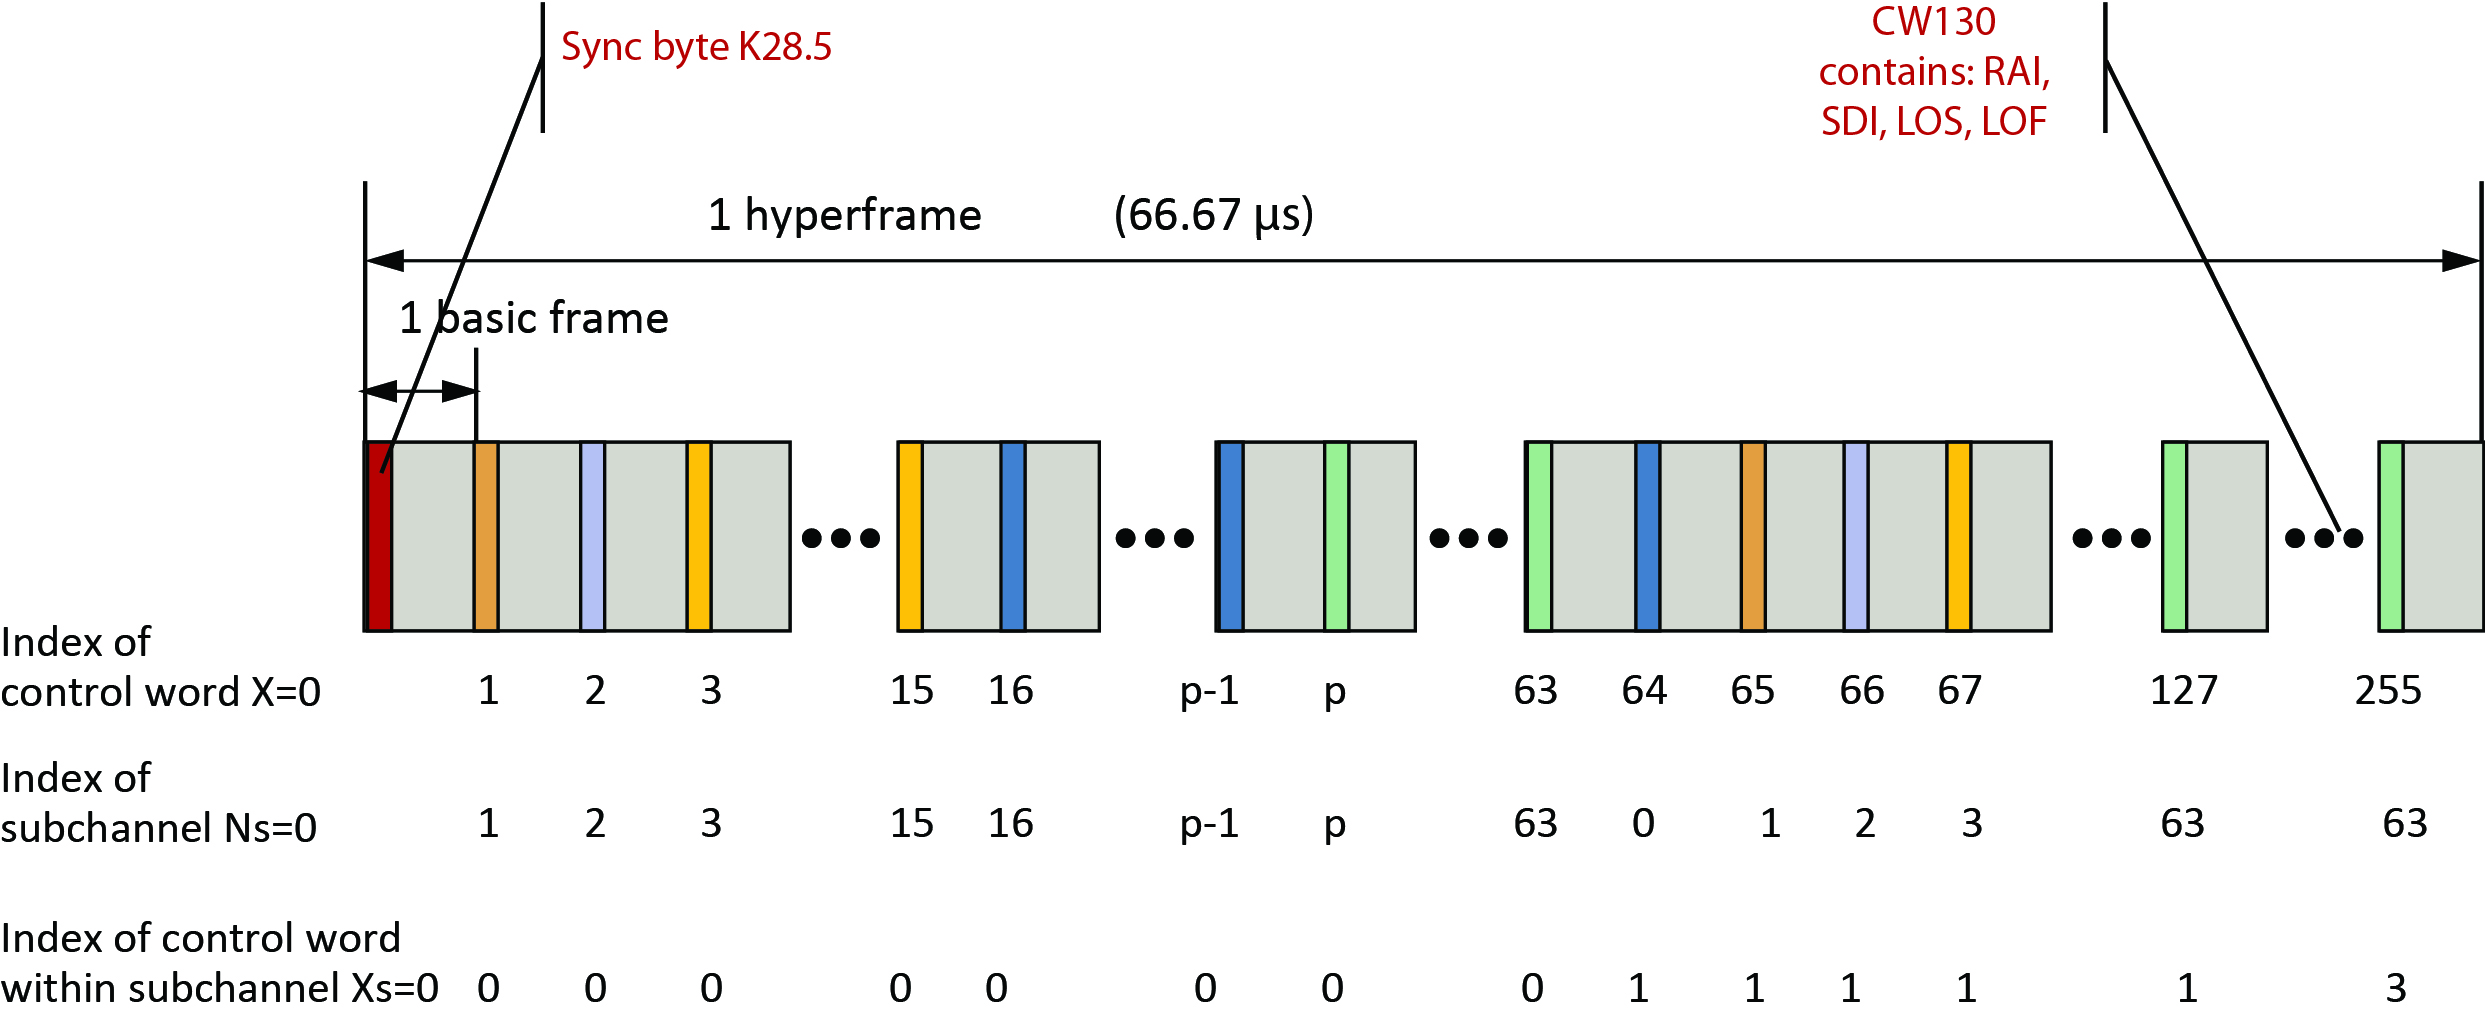 Figure 4 - CPRI frame structure